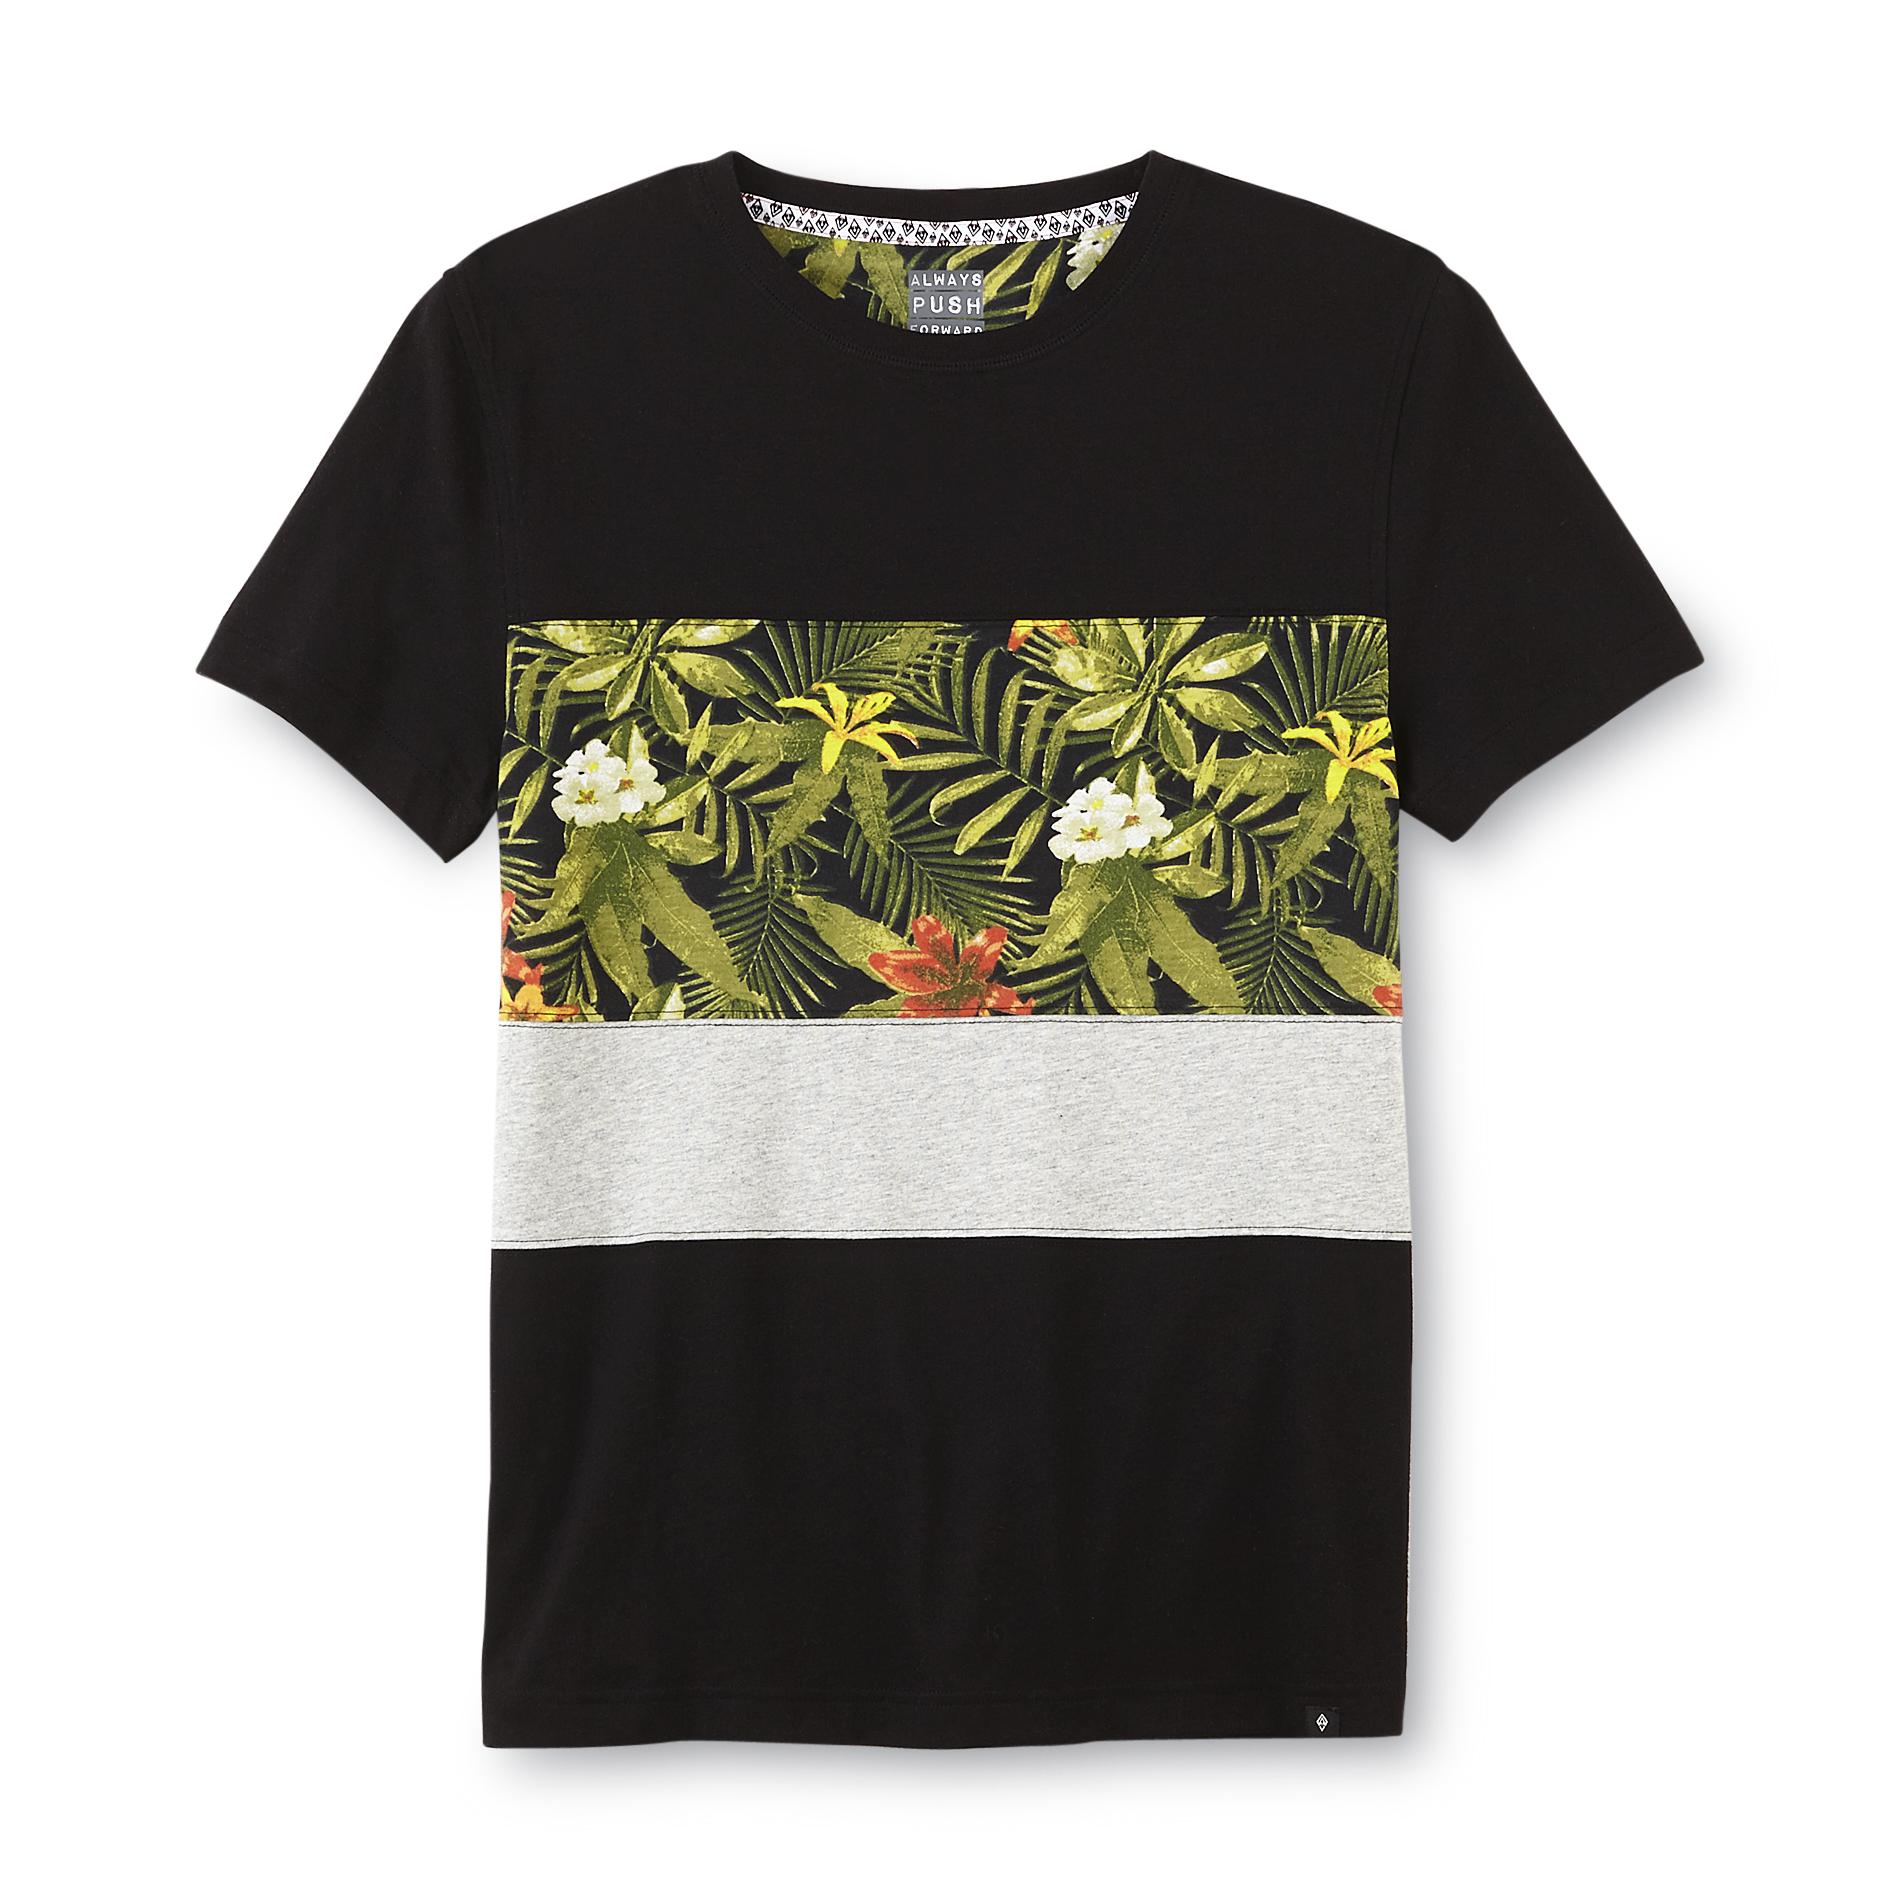 Always Push Forward Men's Graphic T-Shirt - Striped Floral Print